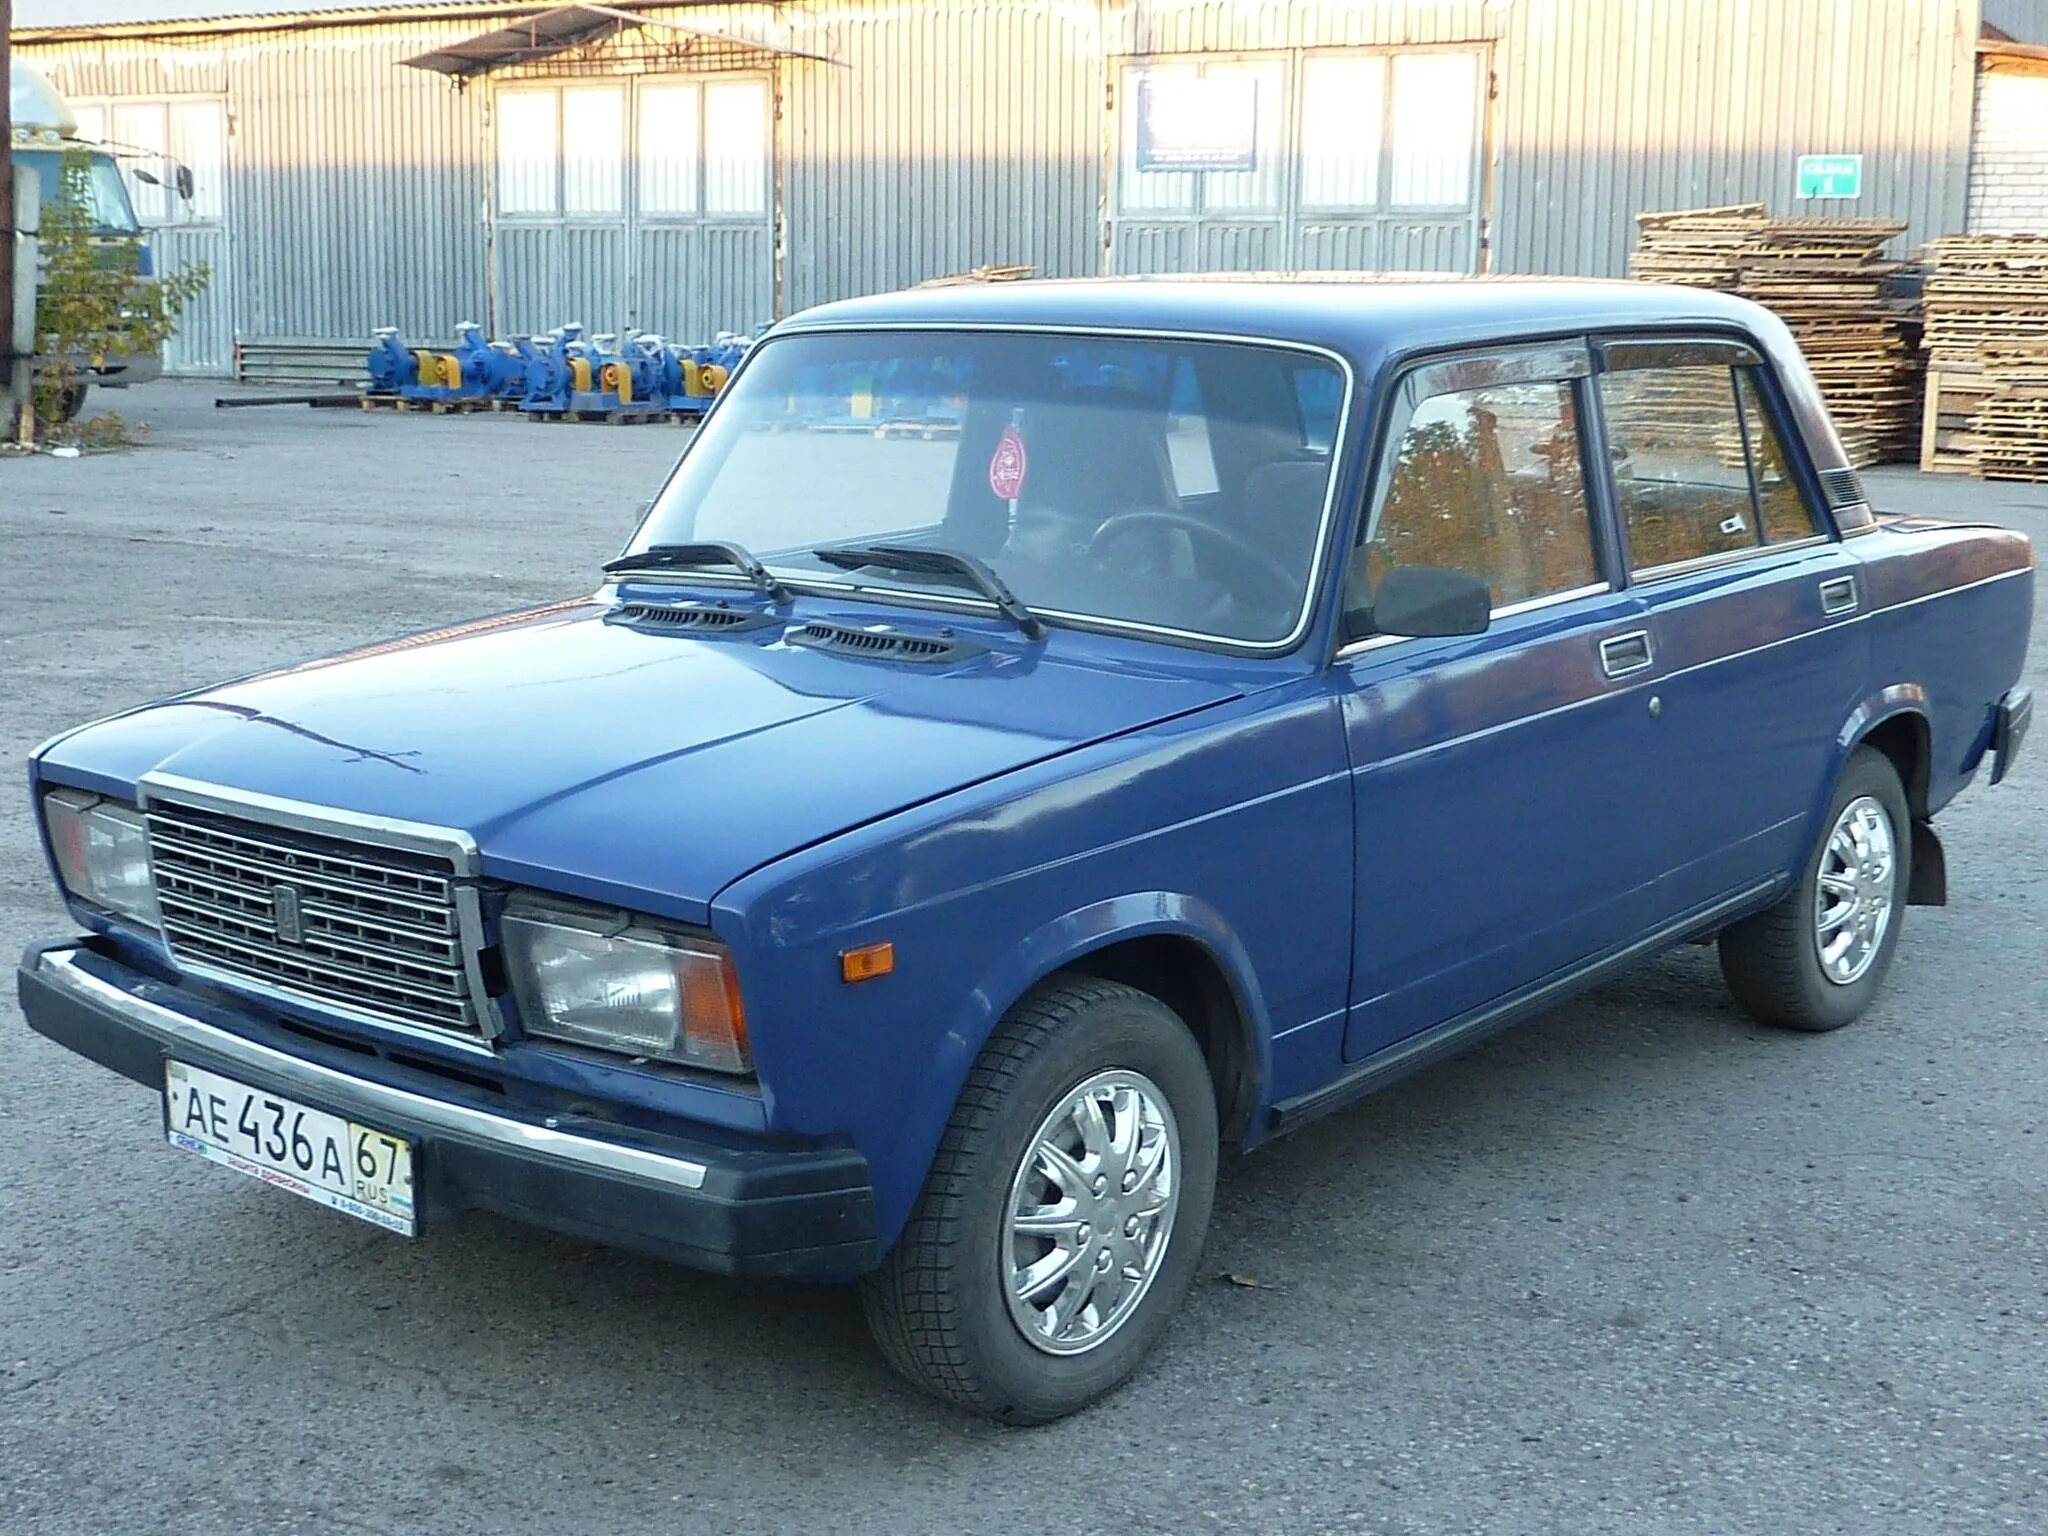 Бэушные жигули. ВАЗ-2107 «Жигули». Семёрка ВАЗ 2107 голубая. Ваз2107 компакт-кар.